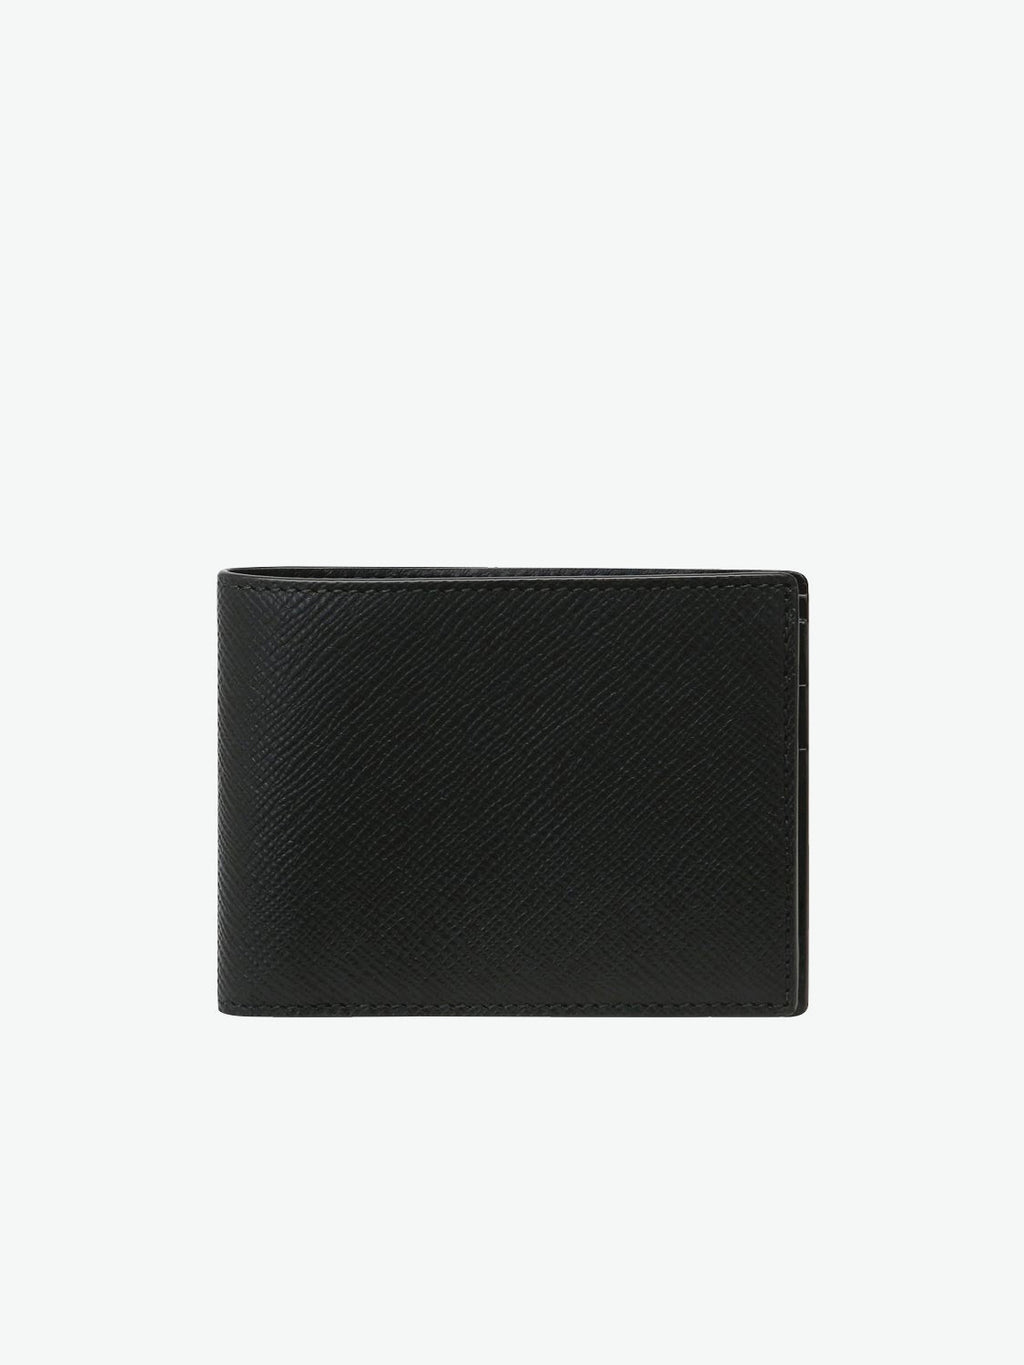 Bally Leather Money Clip Wallet in Black for Men